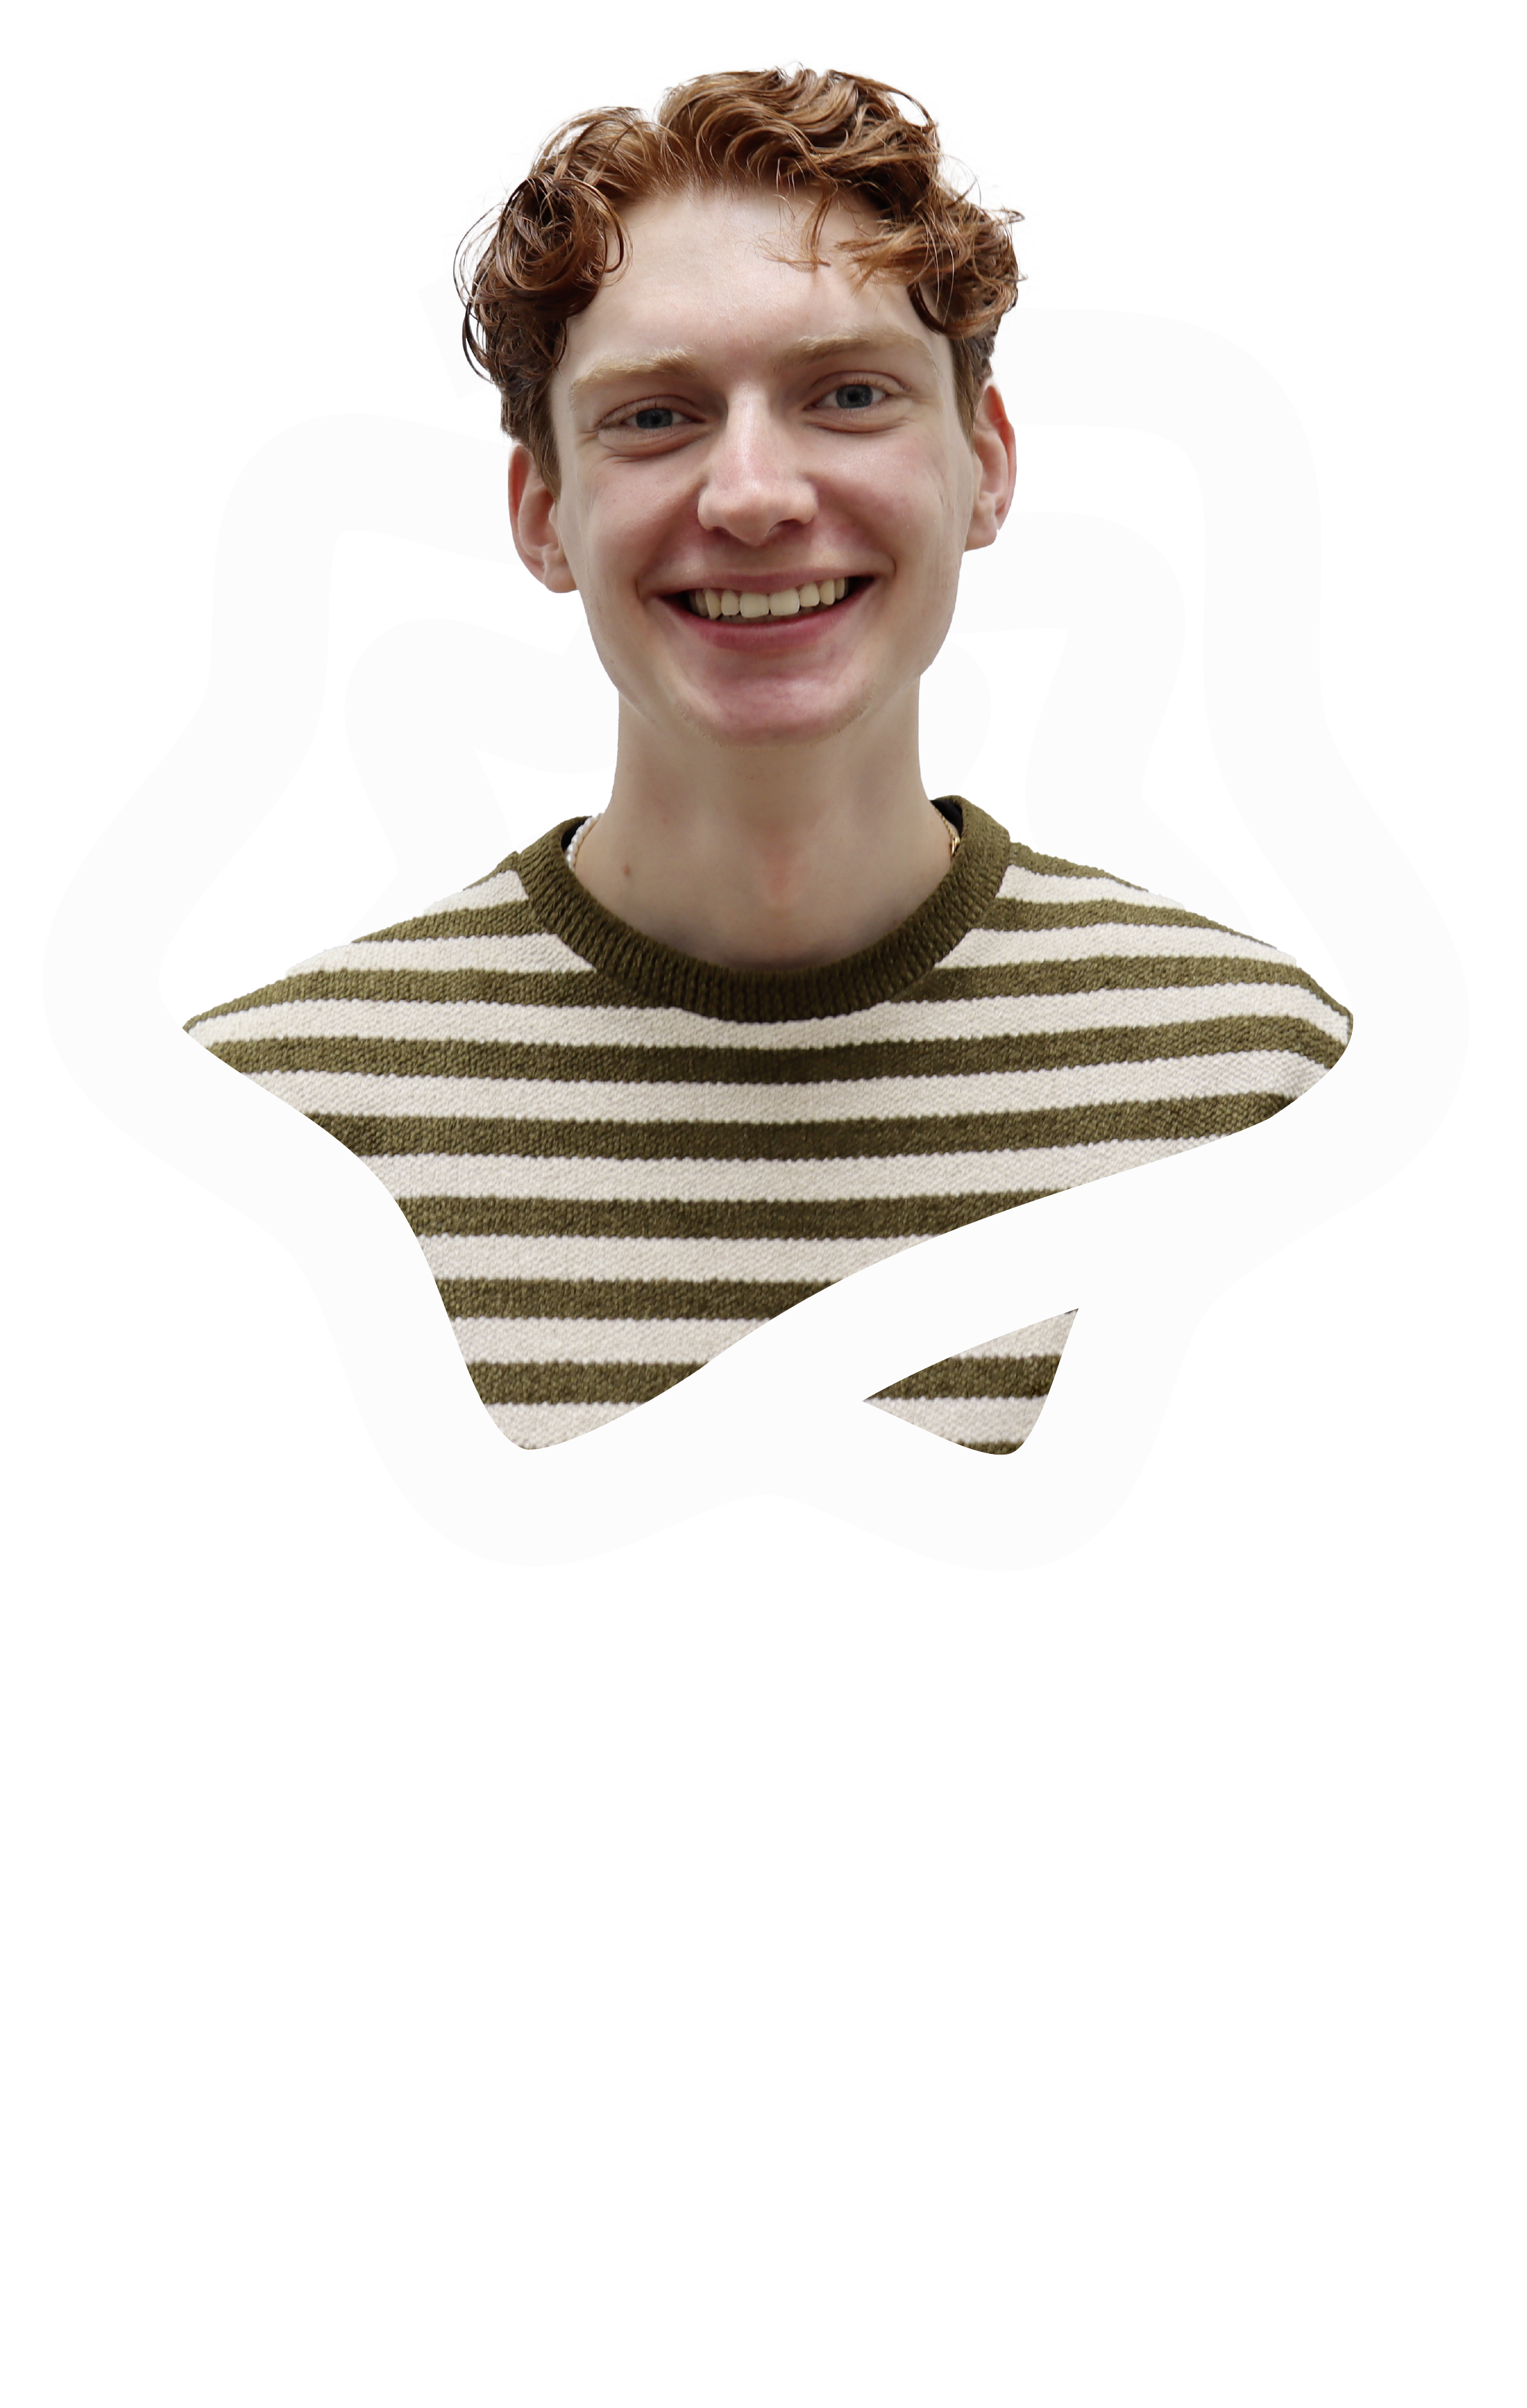 Rasmus Chaikowski